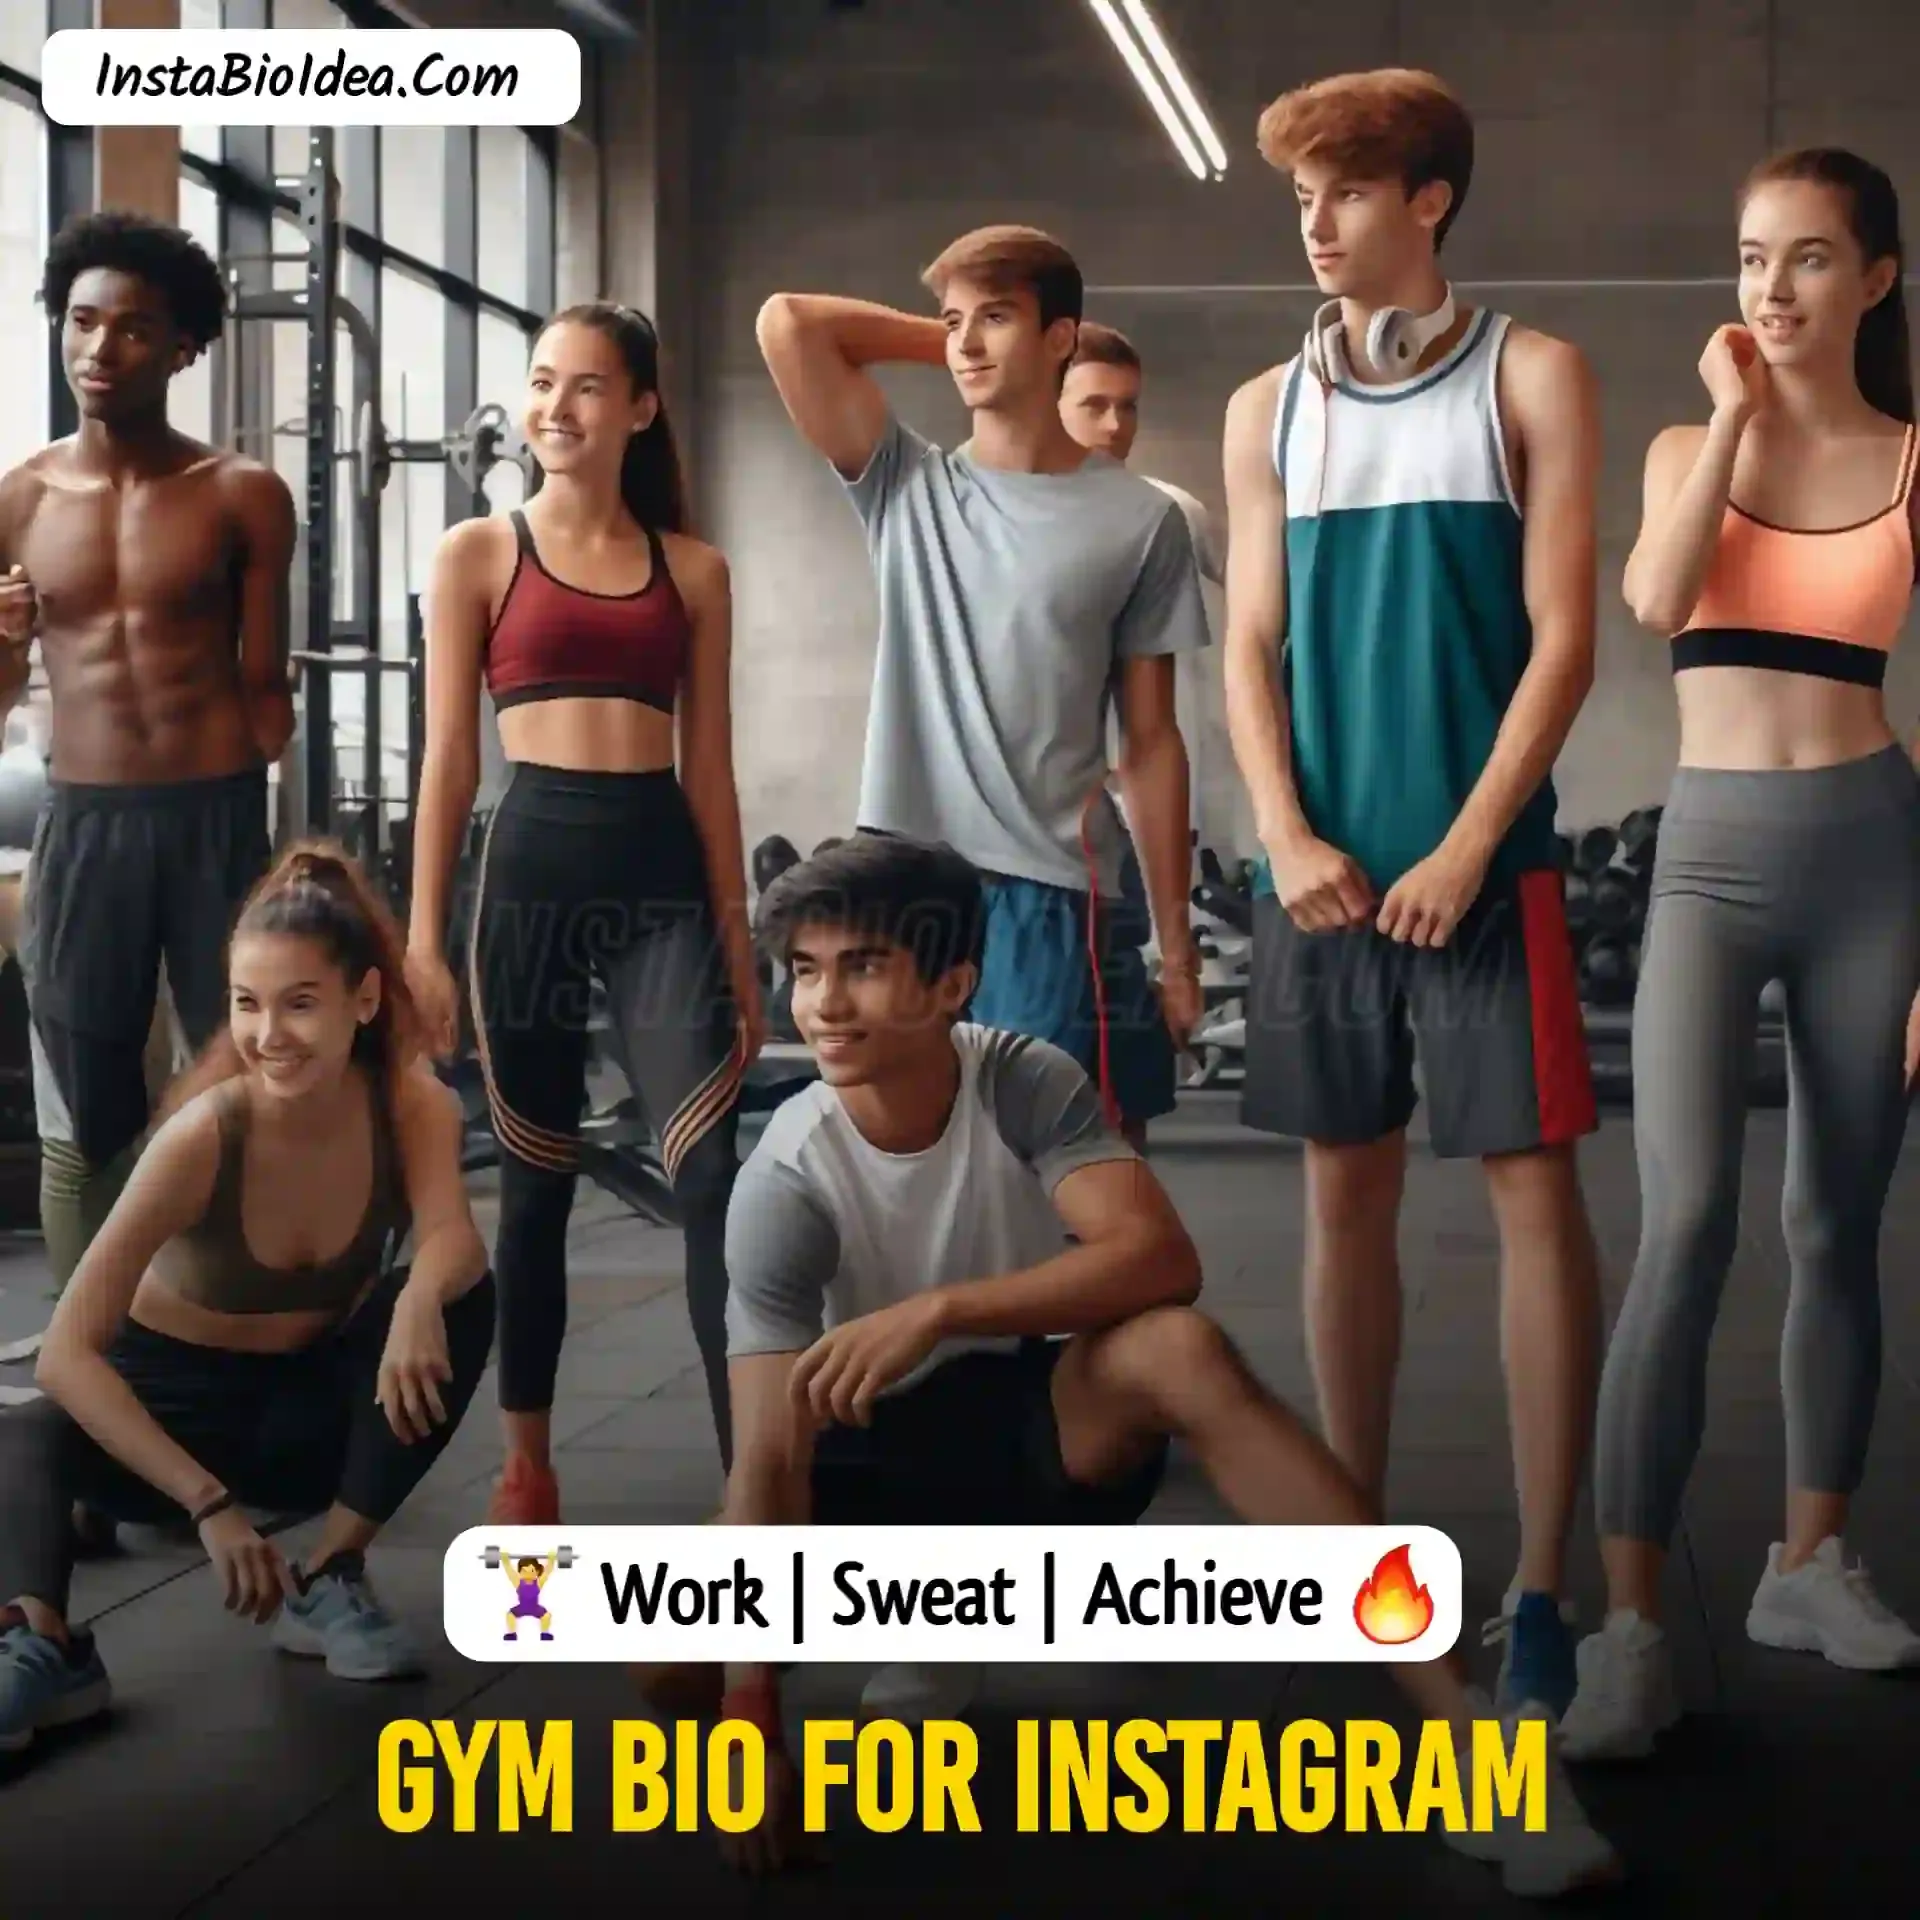 gym bio for instagram image